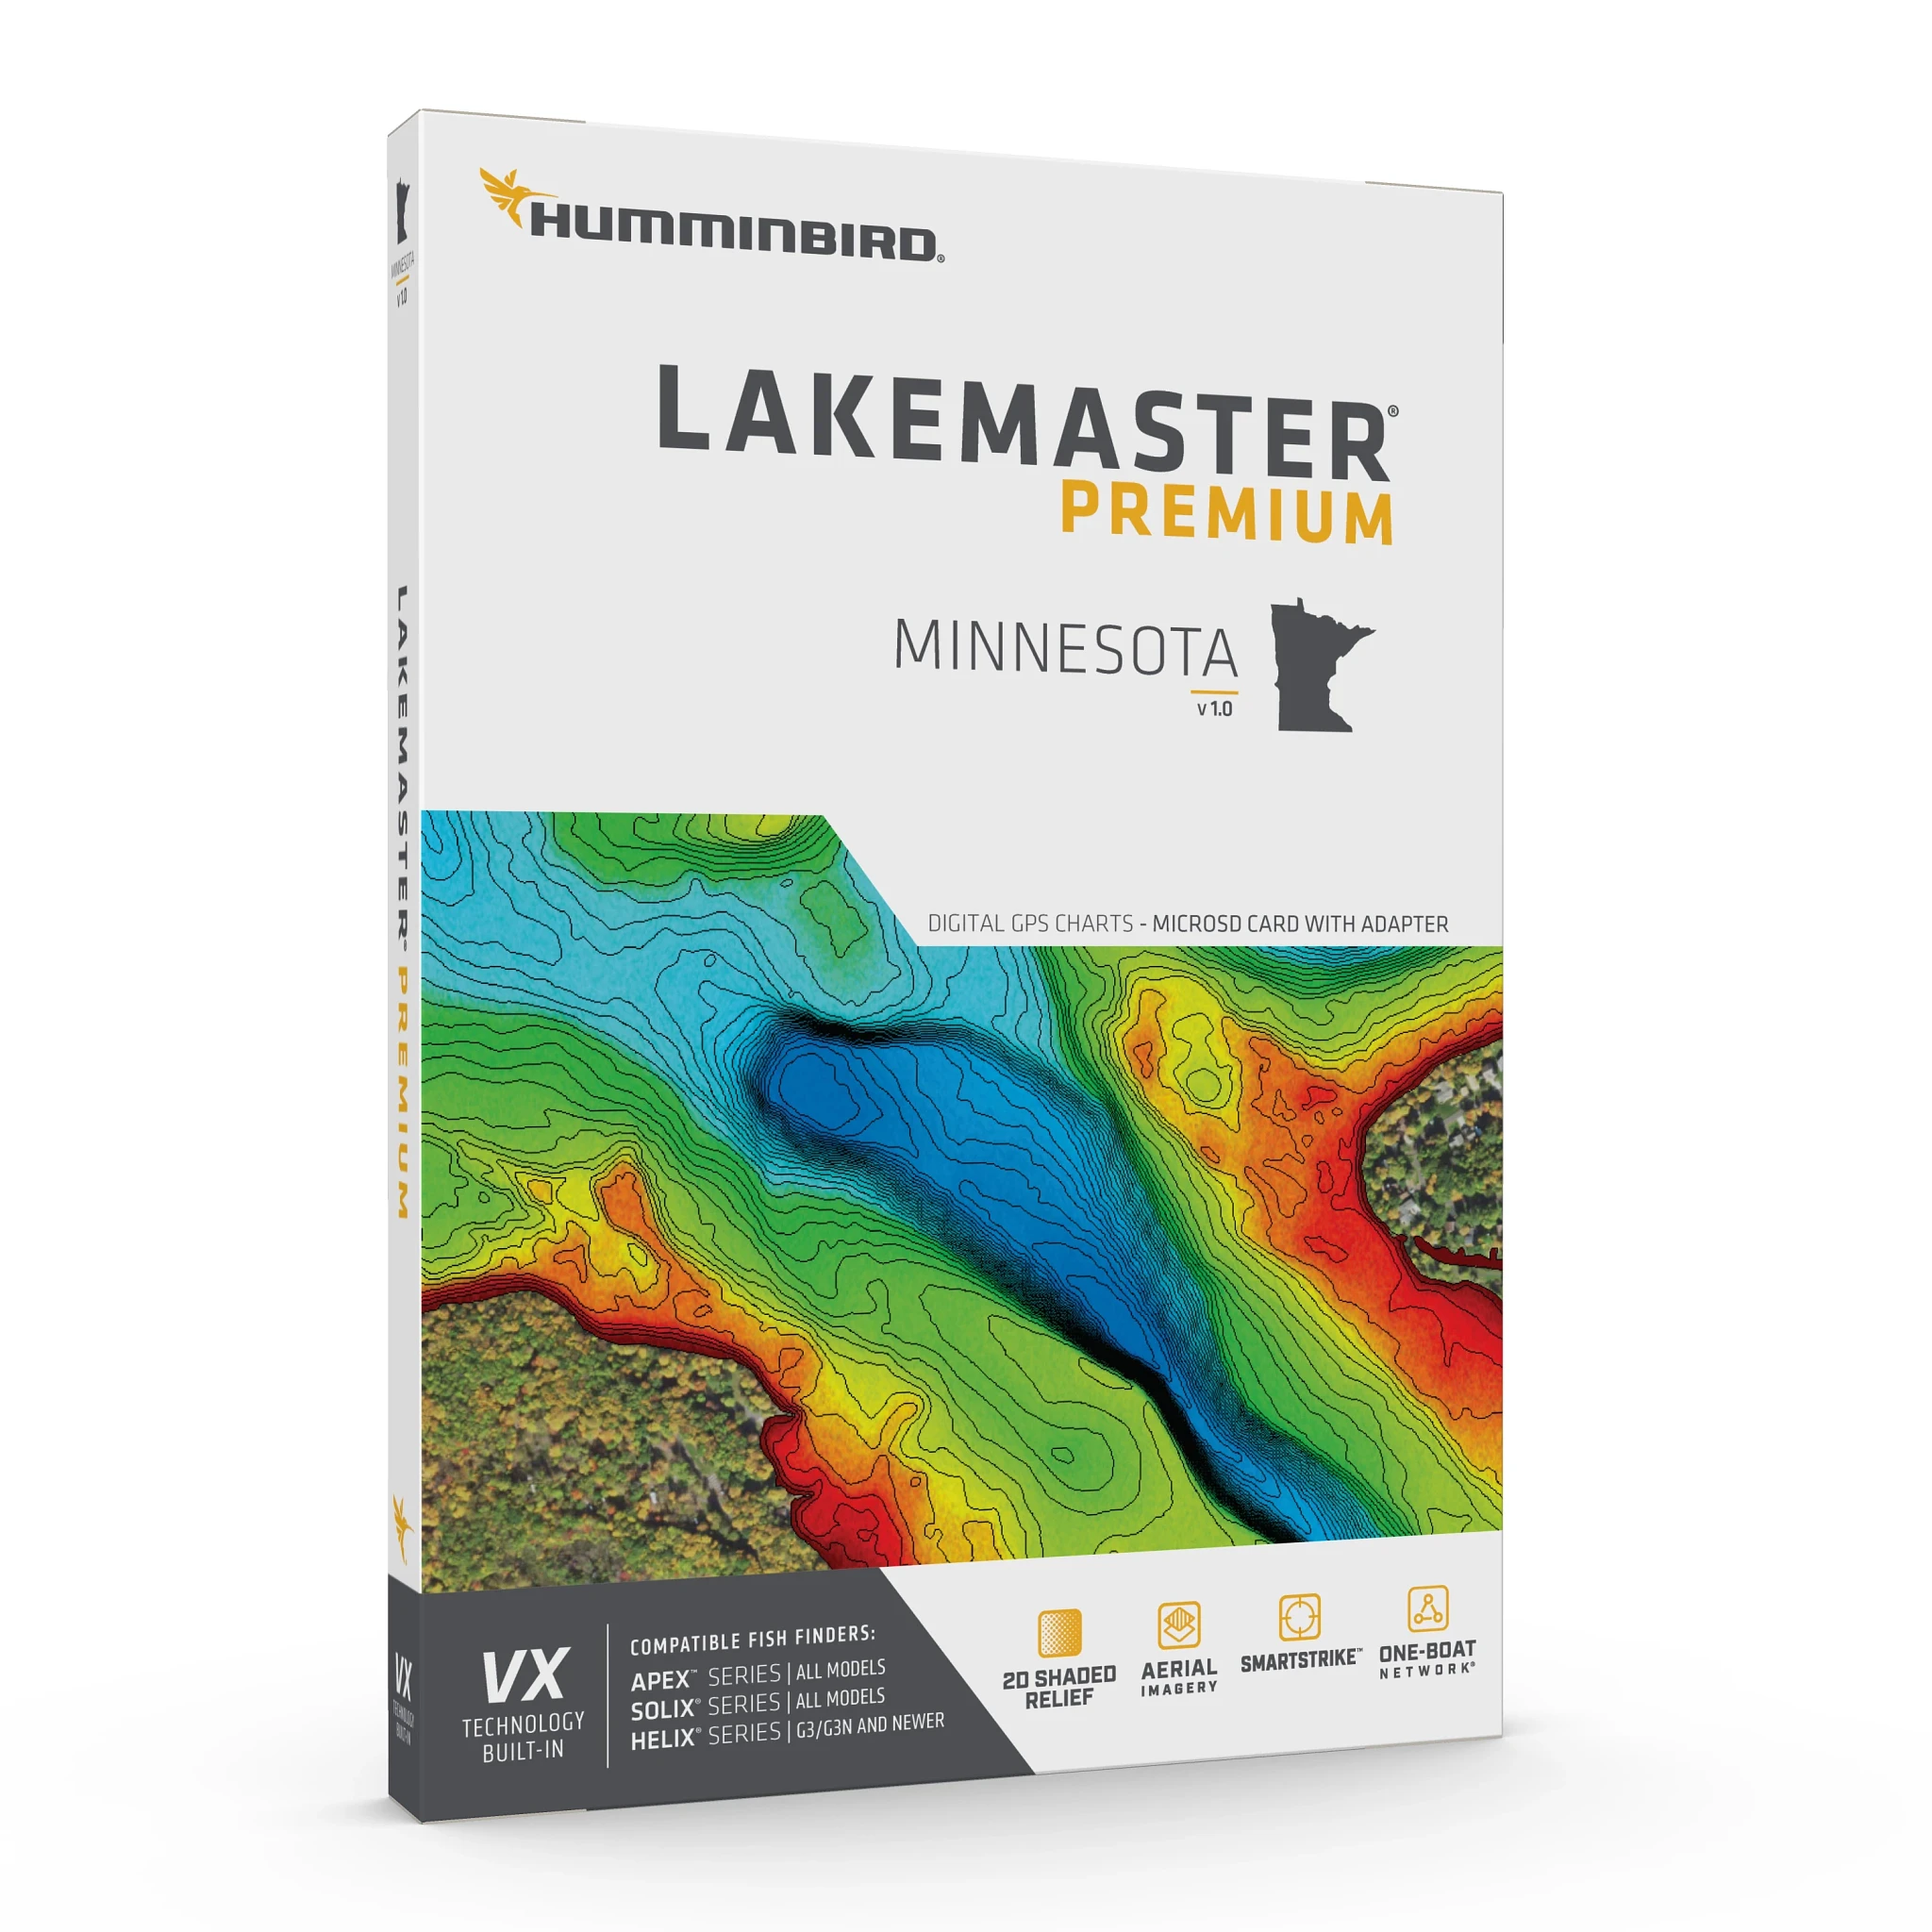 LakeMaster Premium - Minnesota Packaging